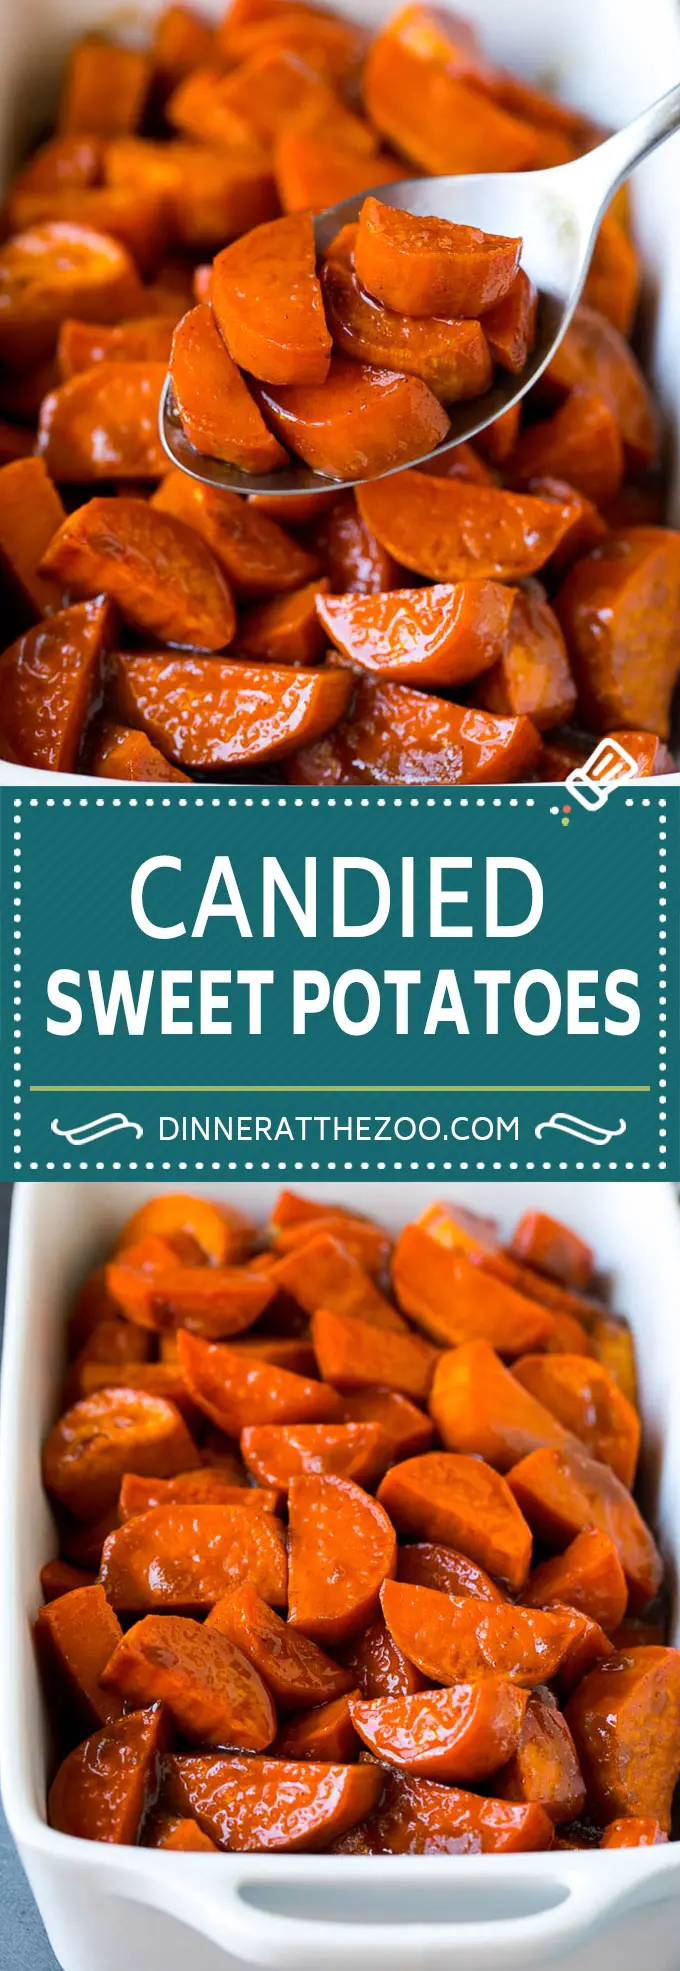 Candied Sweet Potatoes Recipe｜キャンディード・ヤム #sweetpotatoes #yams #sidedish #dinner #fall #thanksgiving #dinneratthezoo